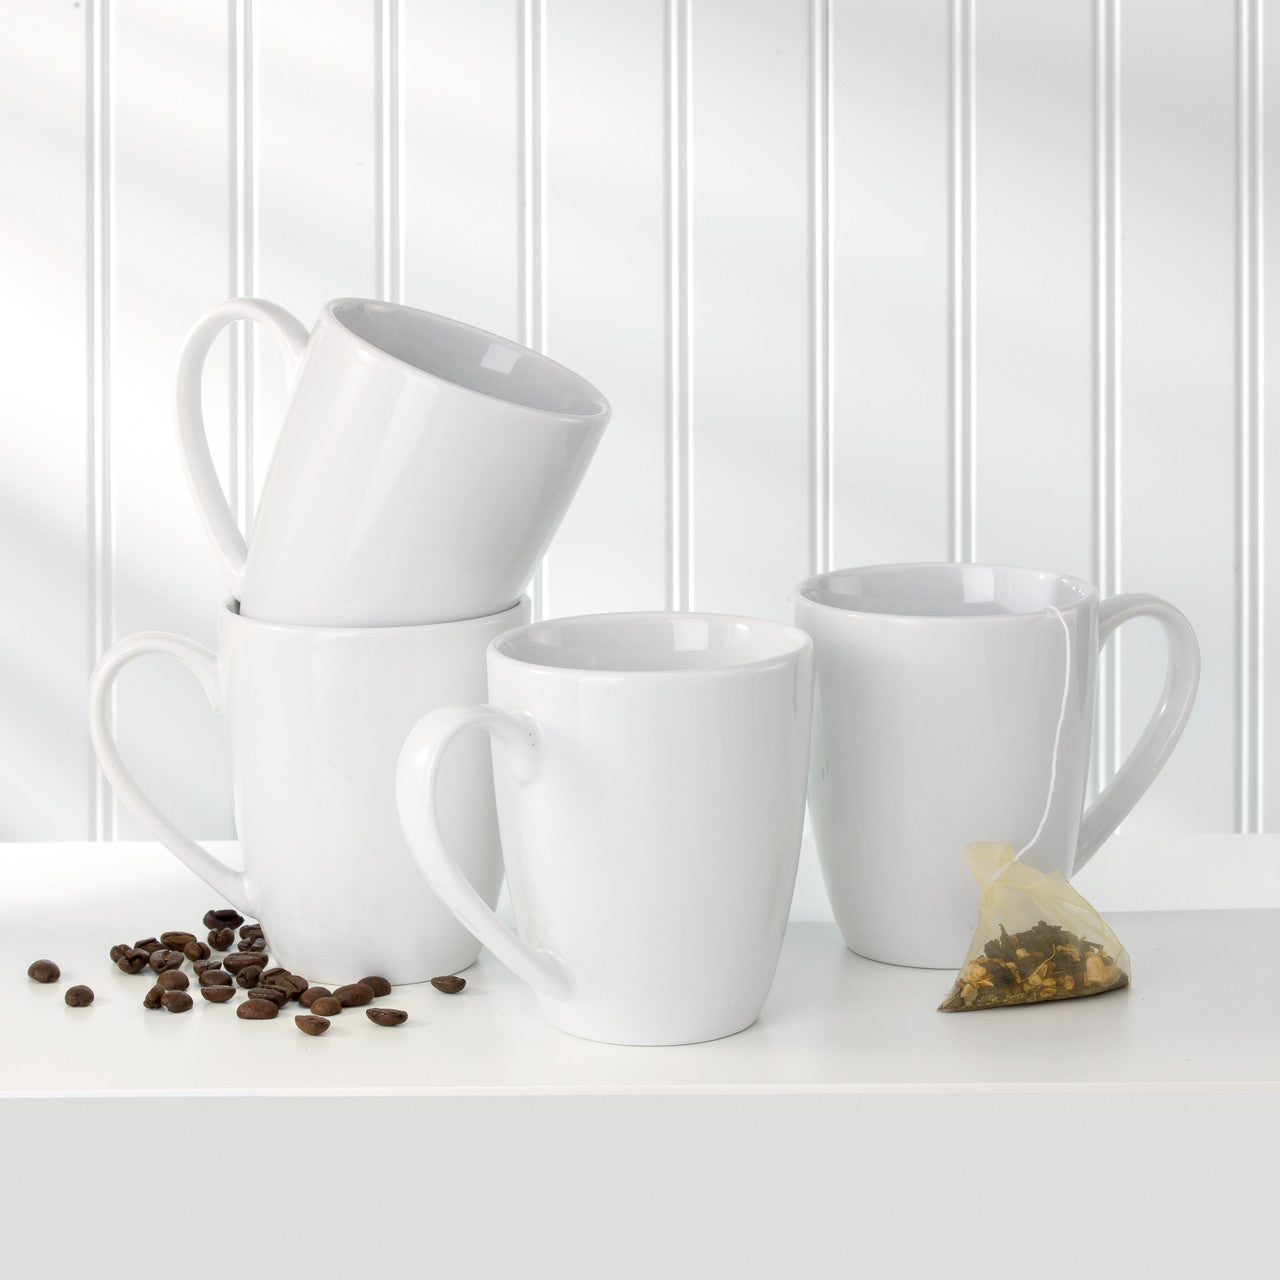  Set of 6 Coffee Mug Sets, 16 Ounce Ceramic Coffee Mugs